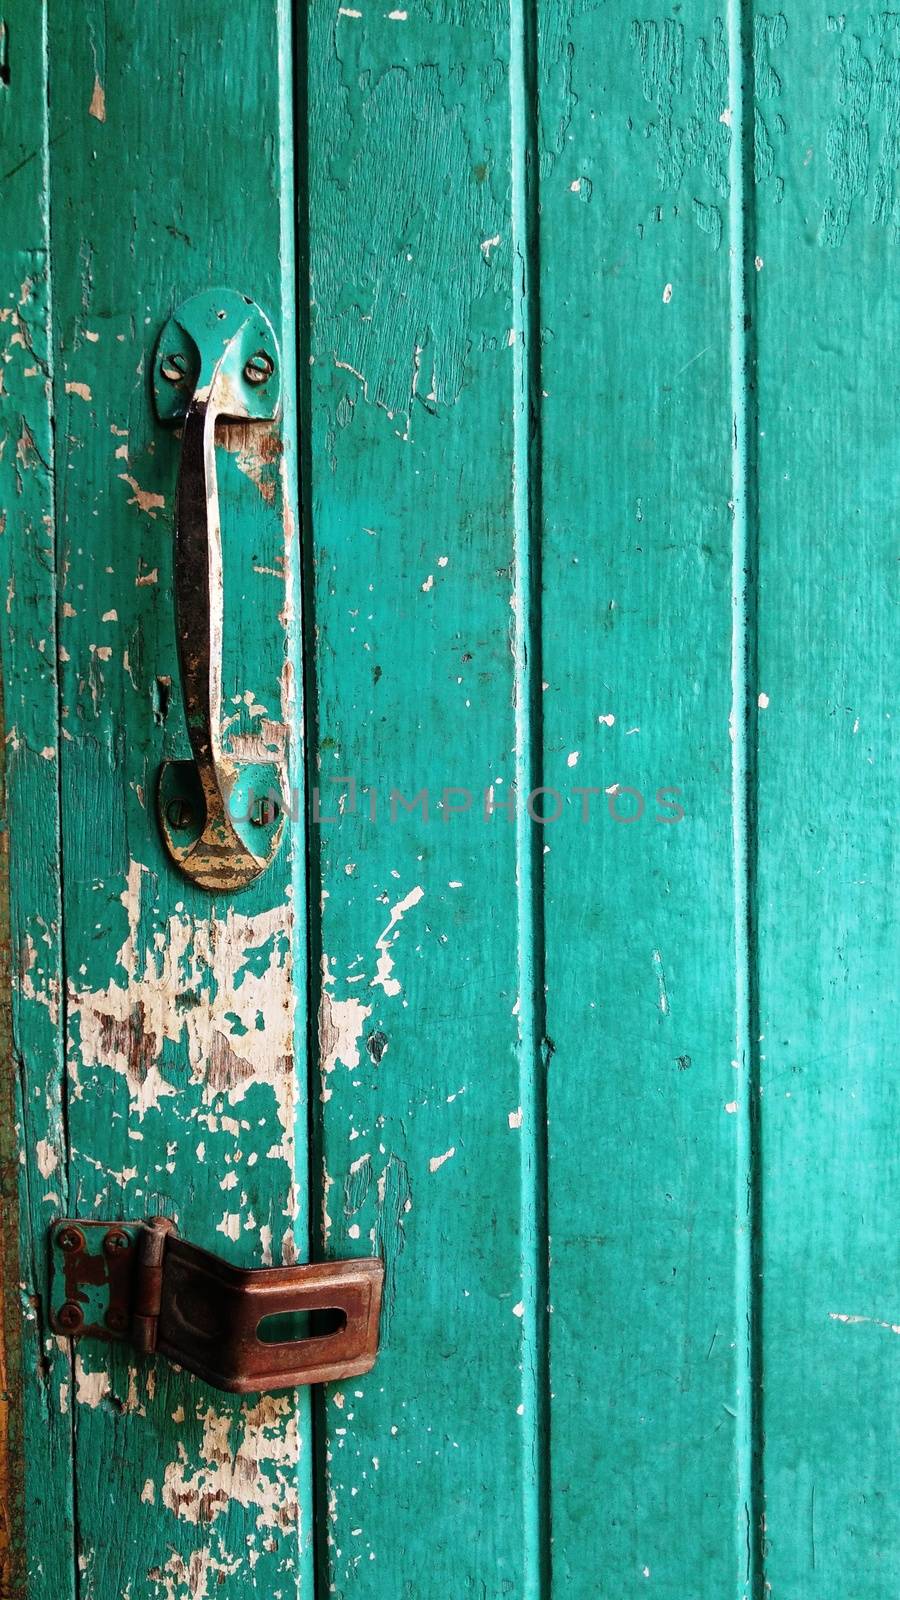 Old Green Wooden Door by Sevenskyx